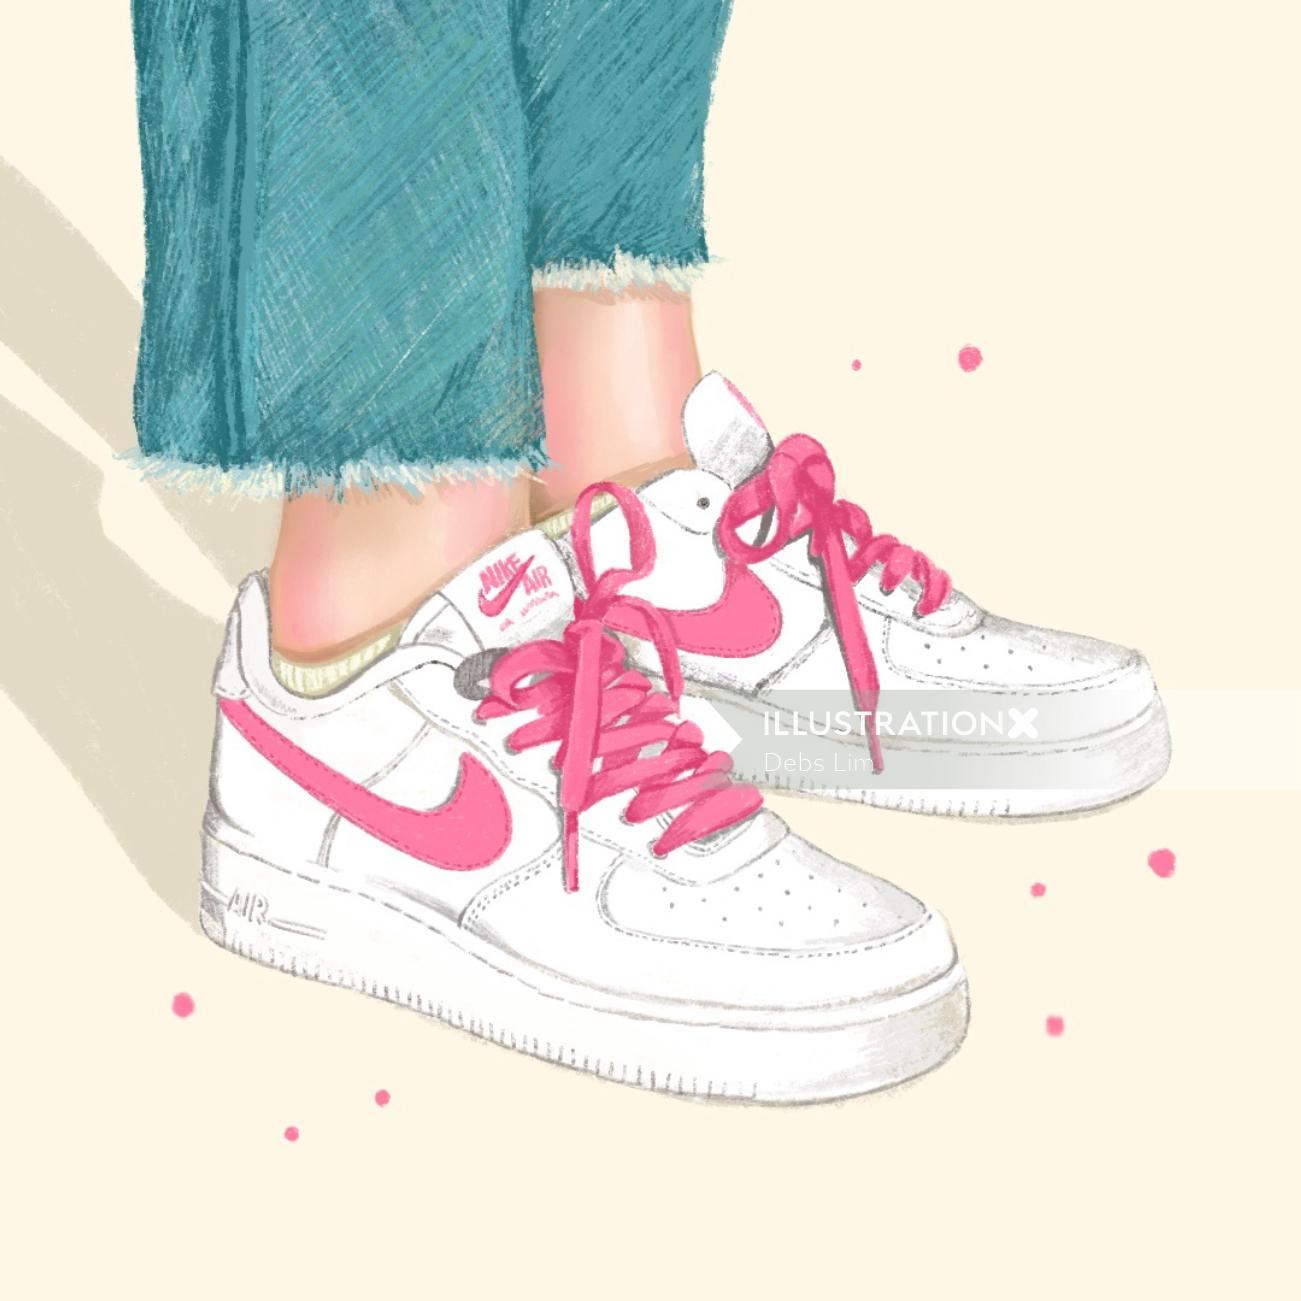 Nike Sneaker Cartoon Illustration